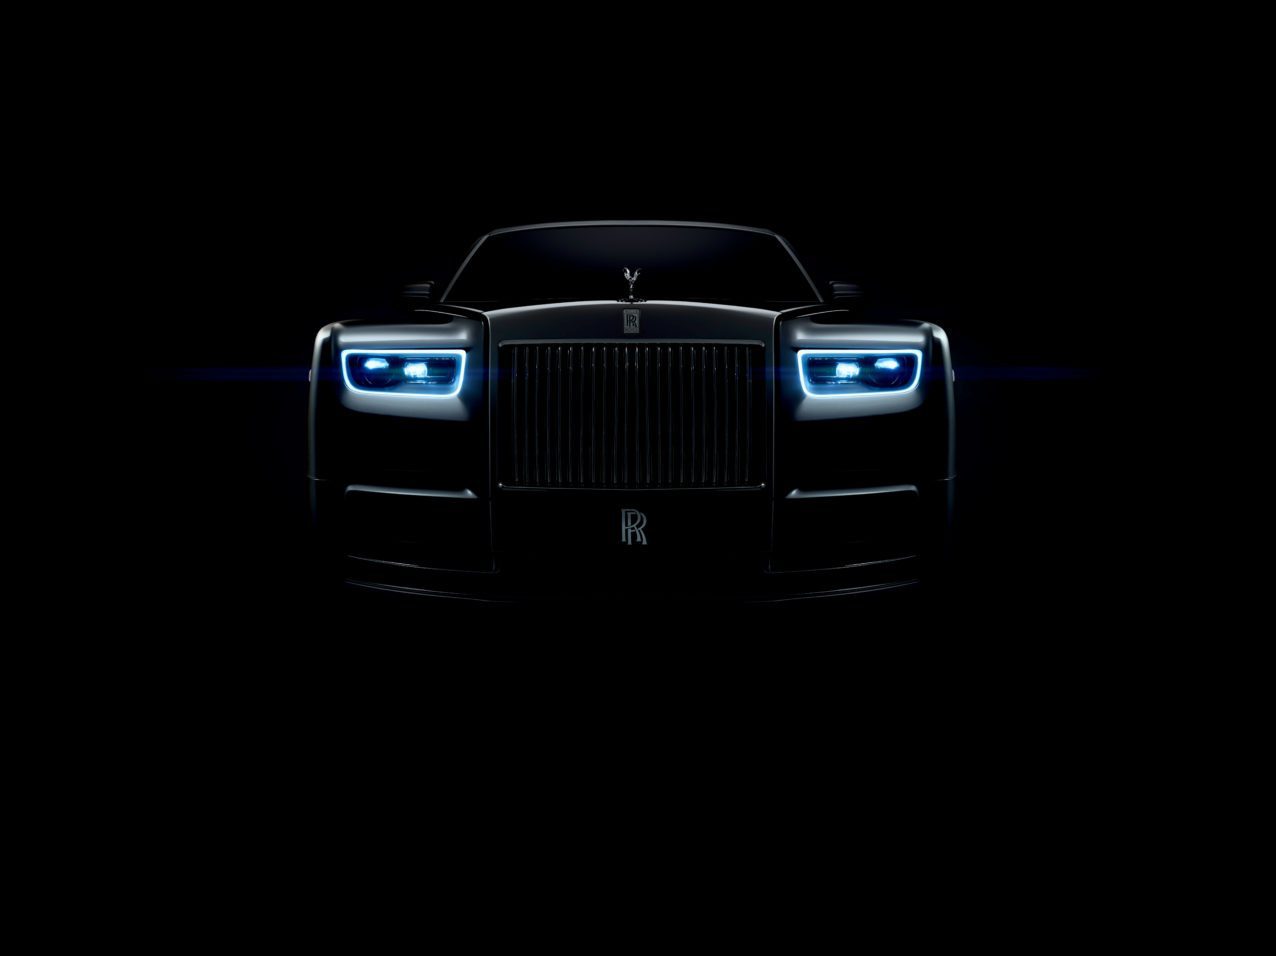 2018 Rolls-Royce Phantom VIII First Drive, Review